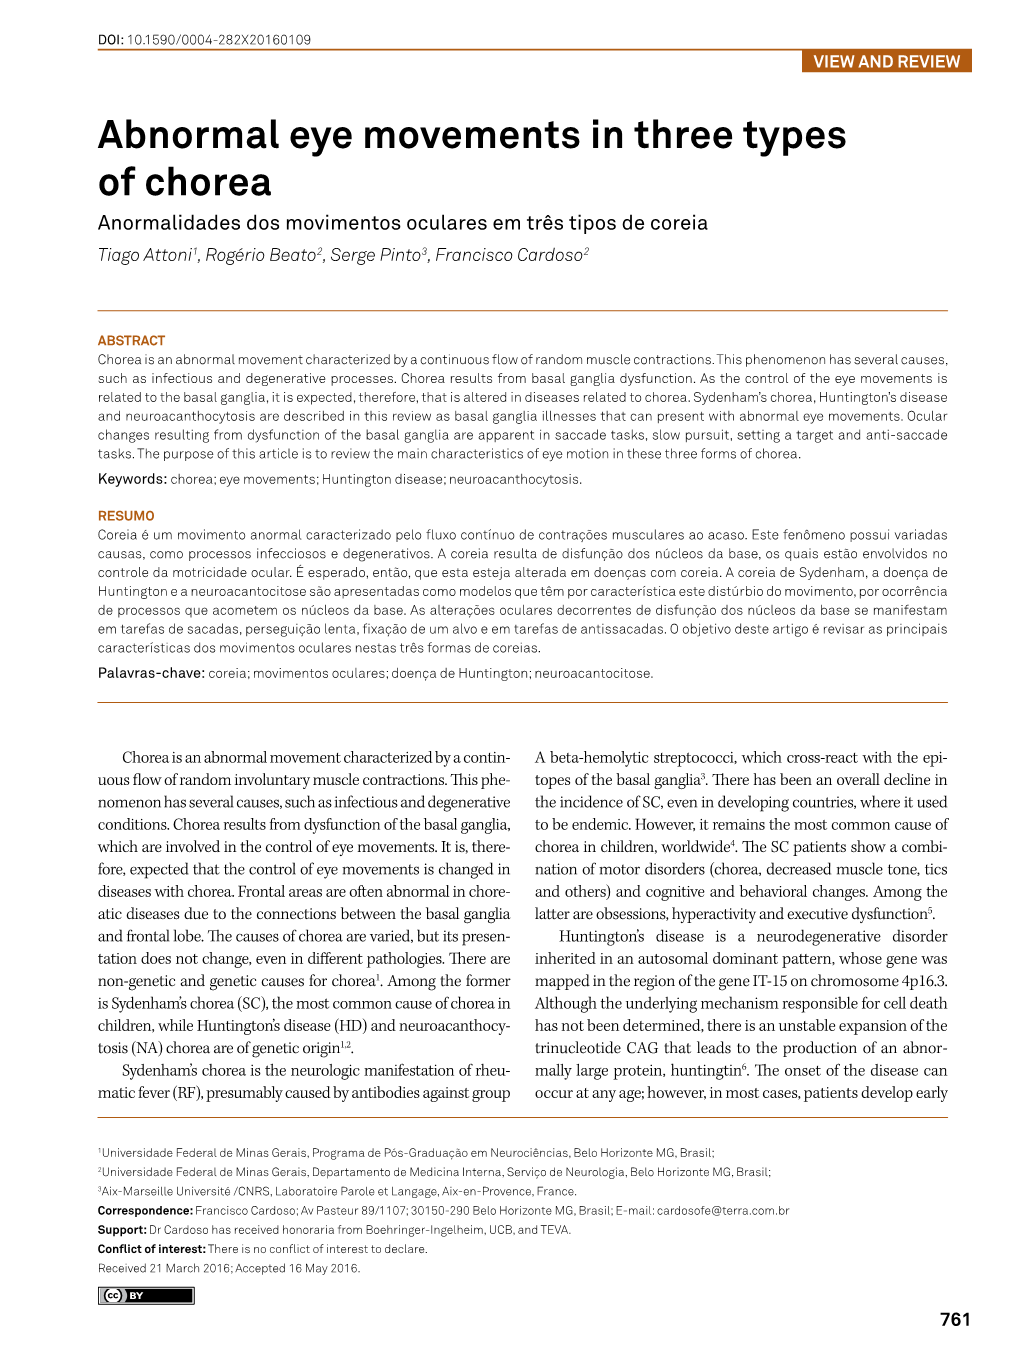 Abnormal Eye Movements in Three Types of Chorea